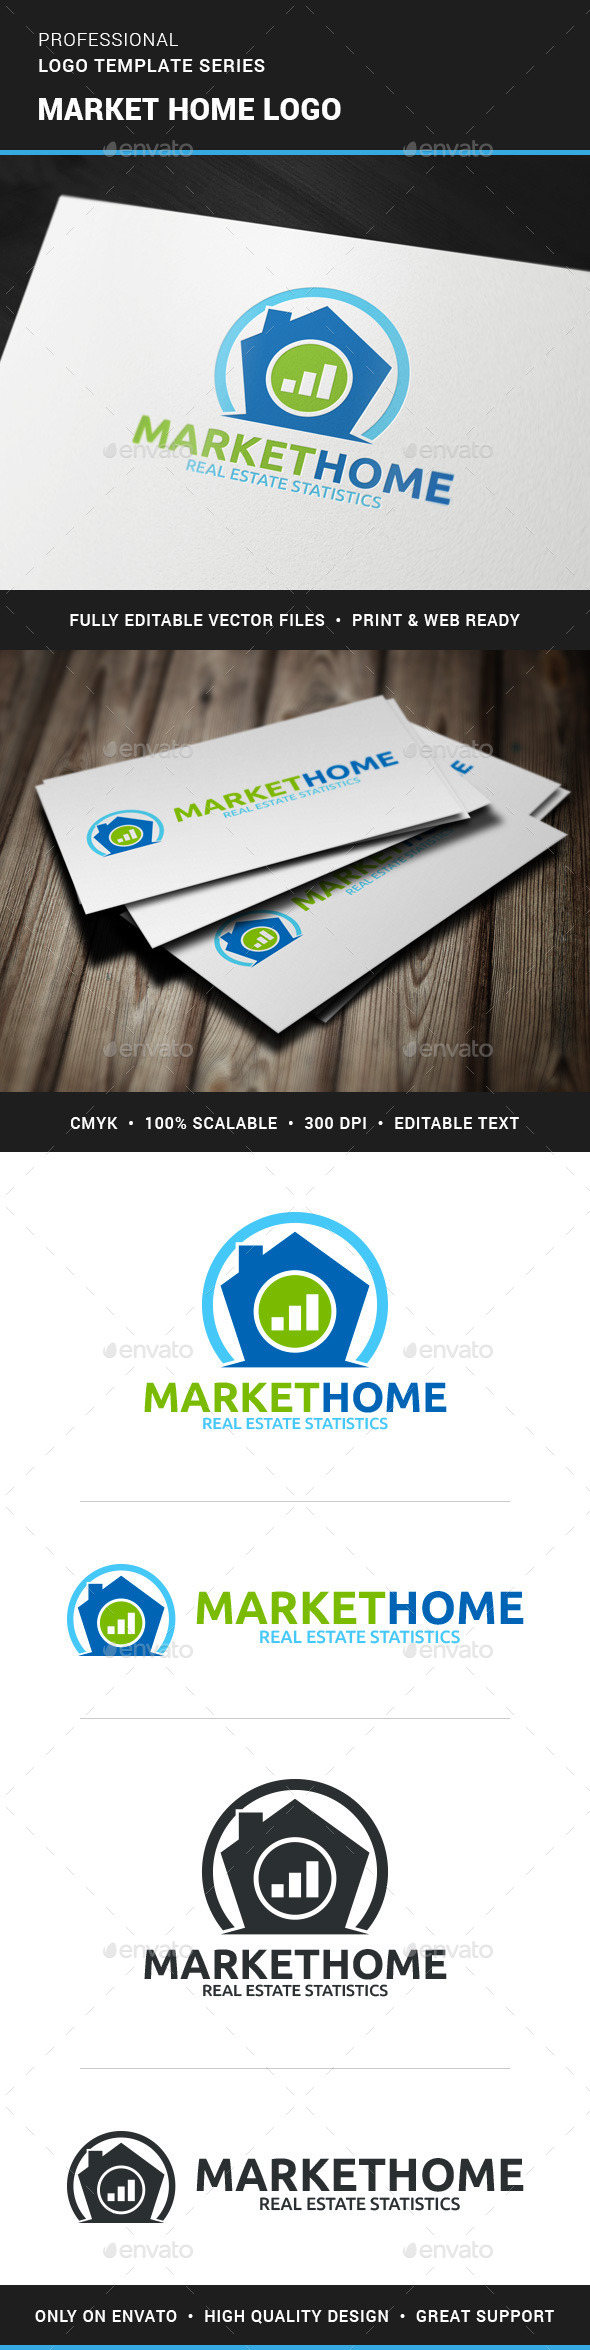 Marketing Home Logo Template